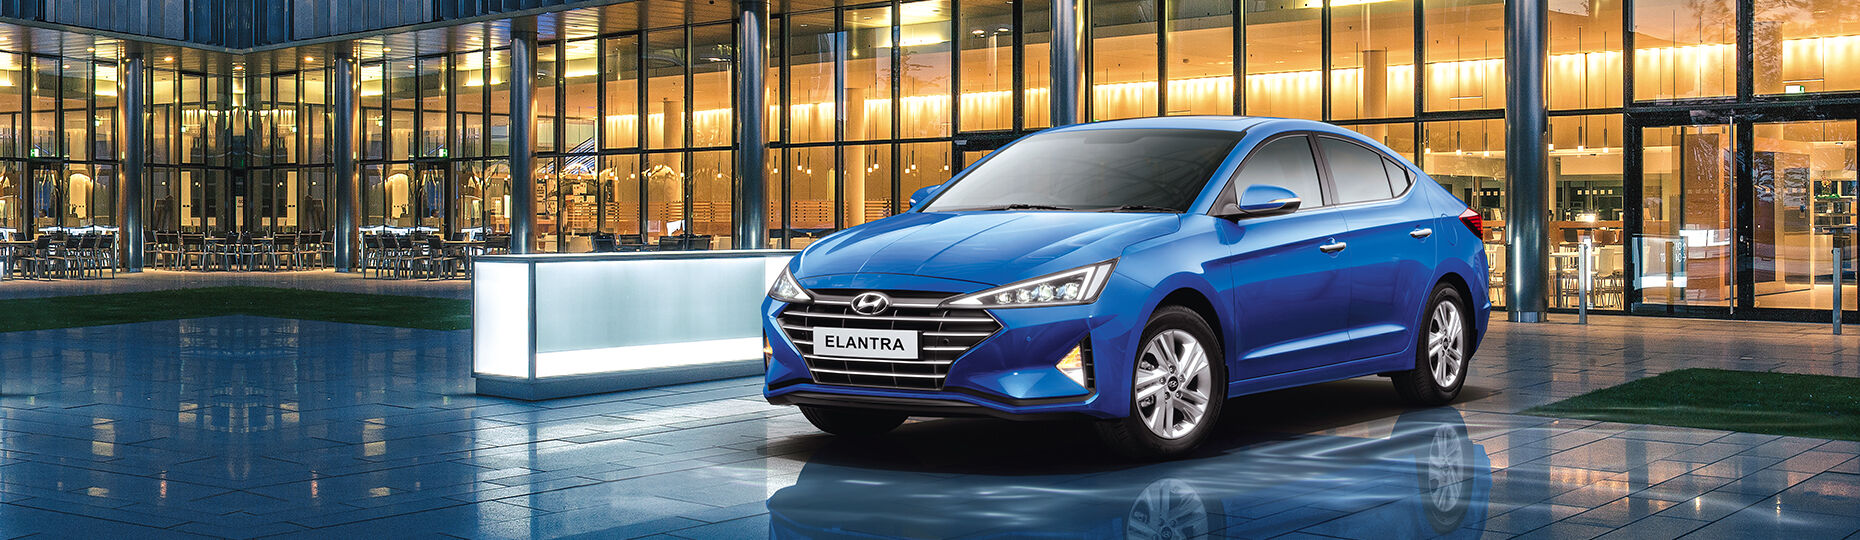 Elantra Highlights Premium Sedan Hyundai India